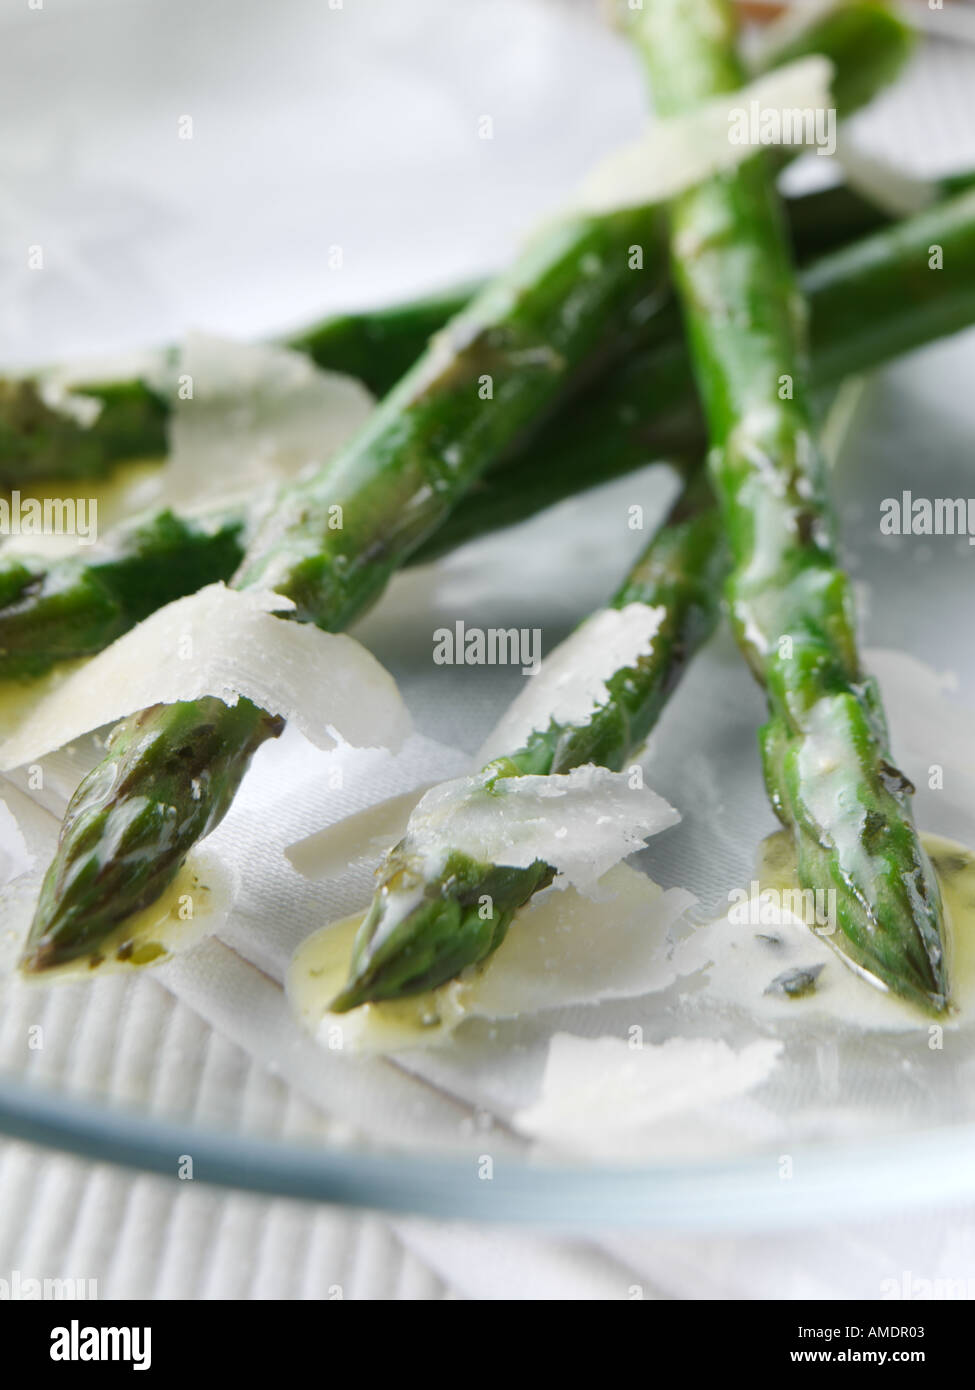 Asparagus pesto salad Stock Photo